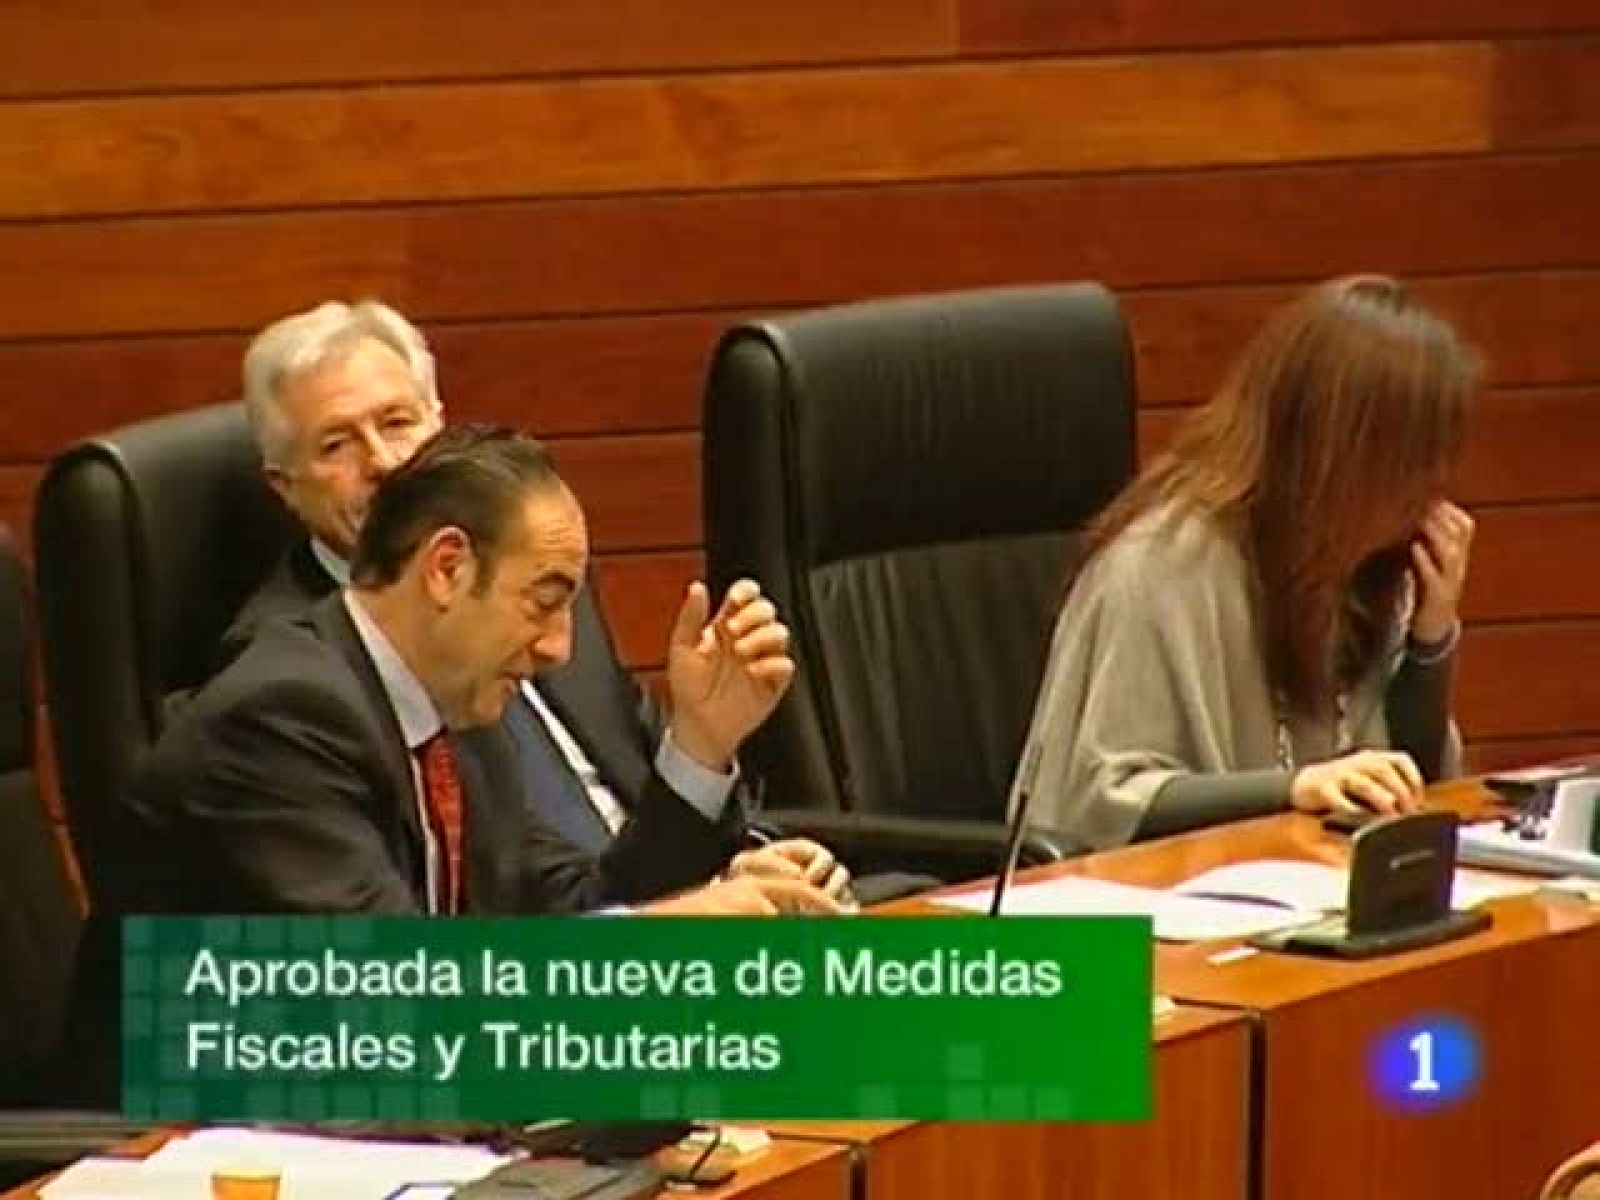 Noticias de Extremadura: Noticias de Extremadura - 17/12/10 | RTVE Play